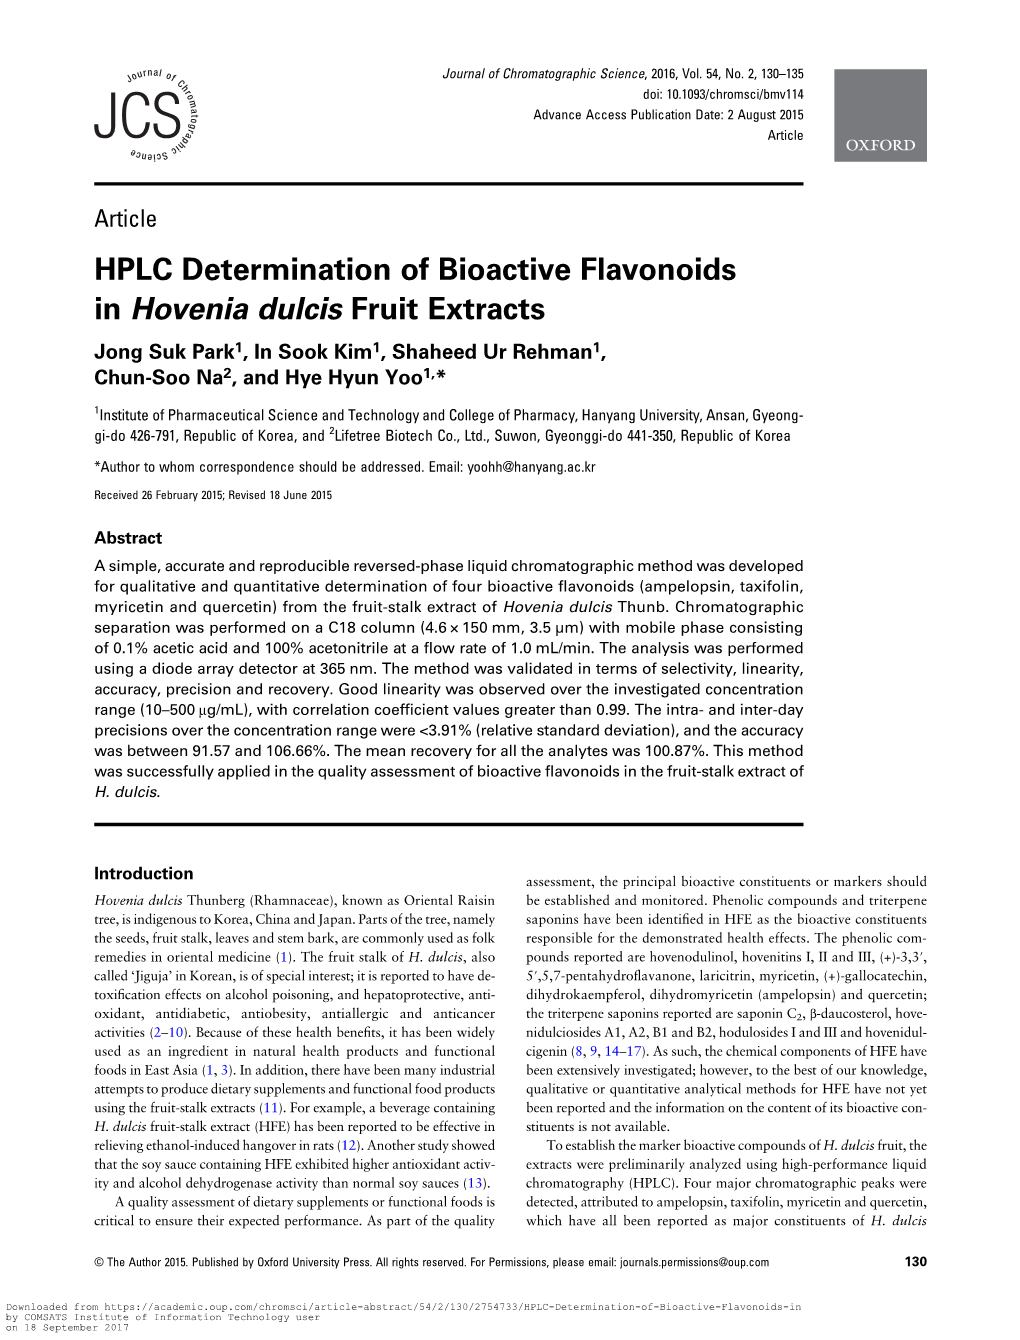 HPLC Determination of Bioactive Flavonoids in Hovenia Dulcis Fruit Extracts Jong Suk Park1, in Sook Kim1, Shaheed Ur Rehman1, Chun-Soo Na2, and Hye Hyun Yoo1,*